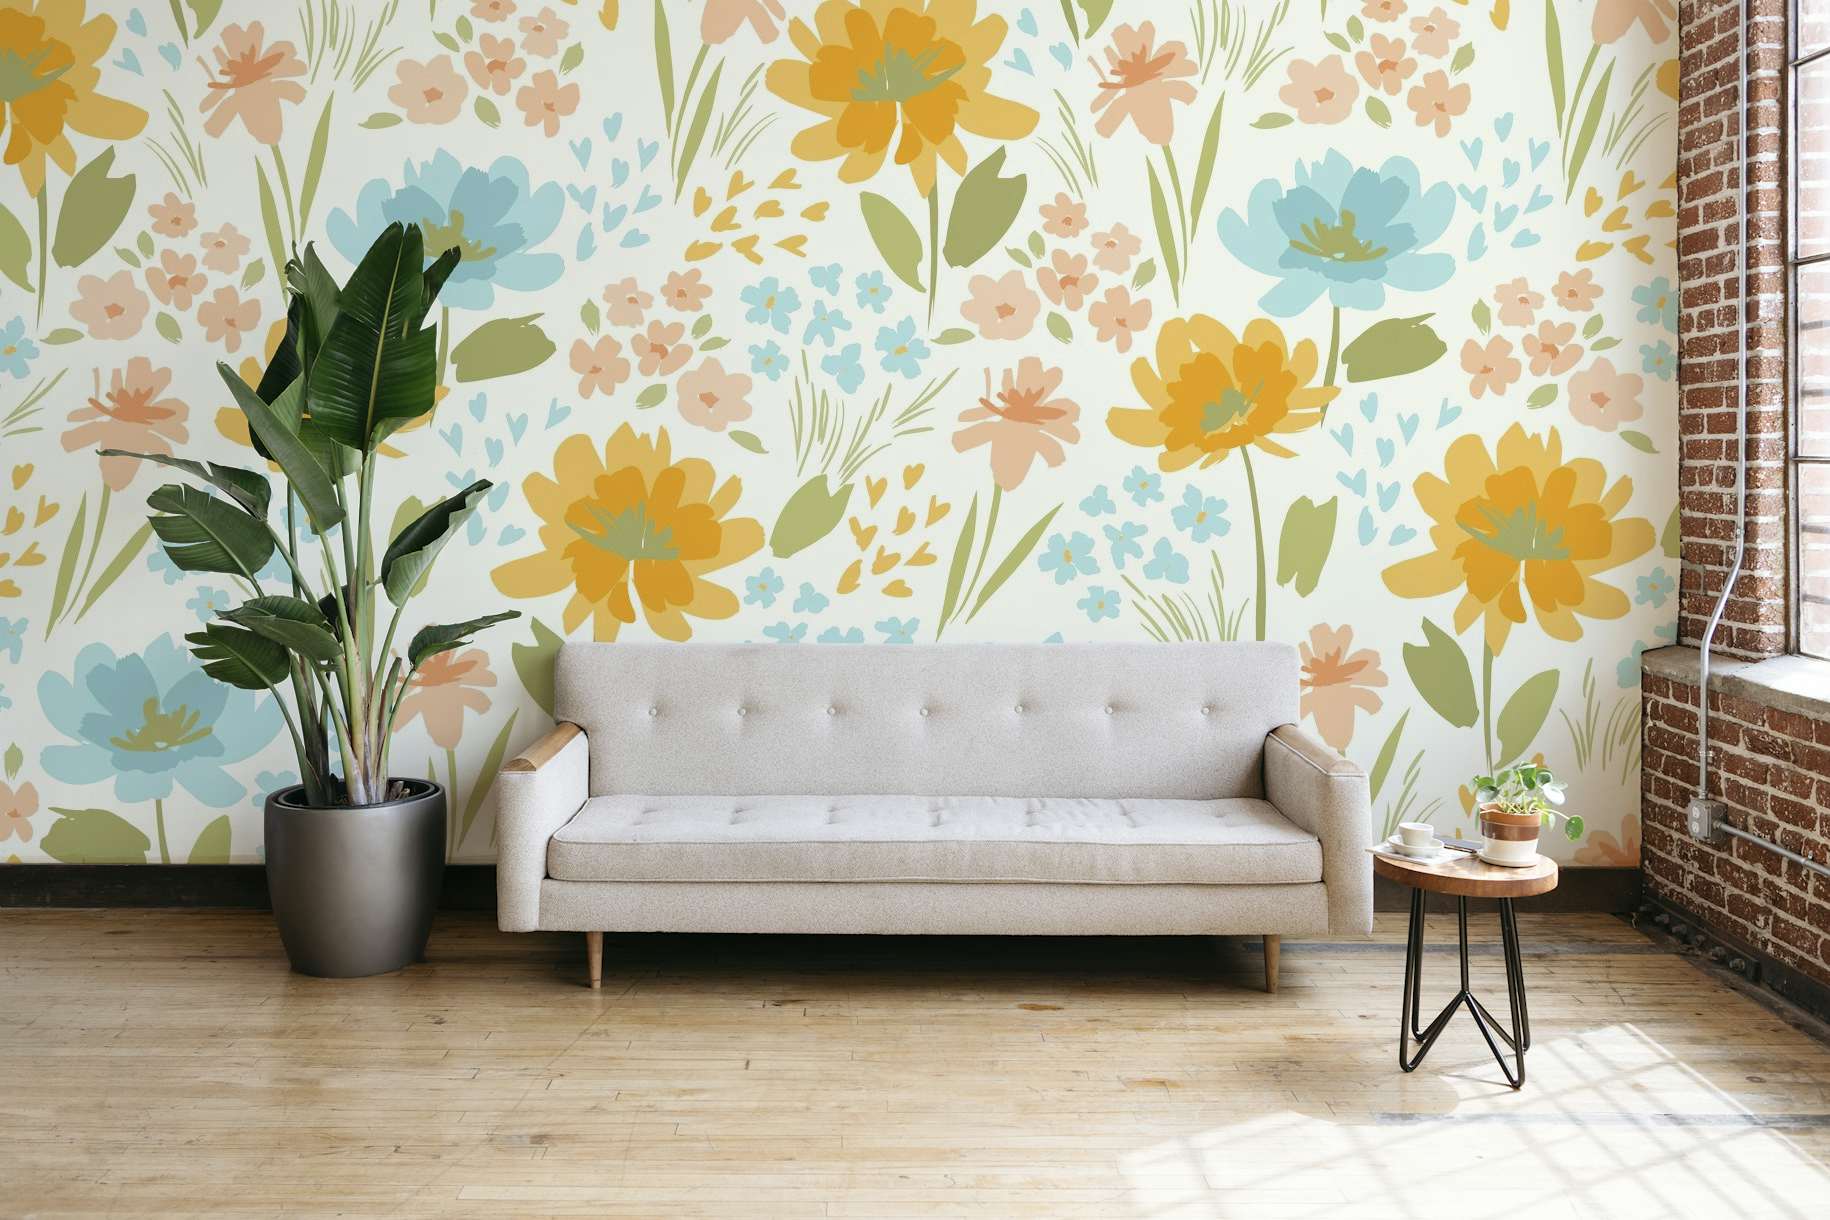 Bright floral pattern wallpaper